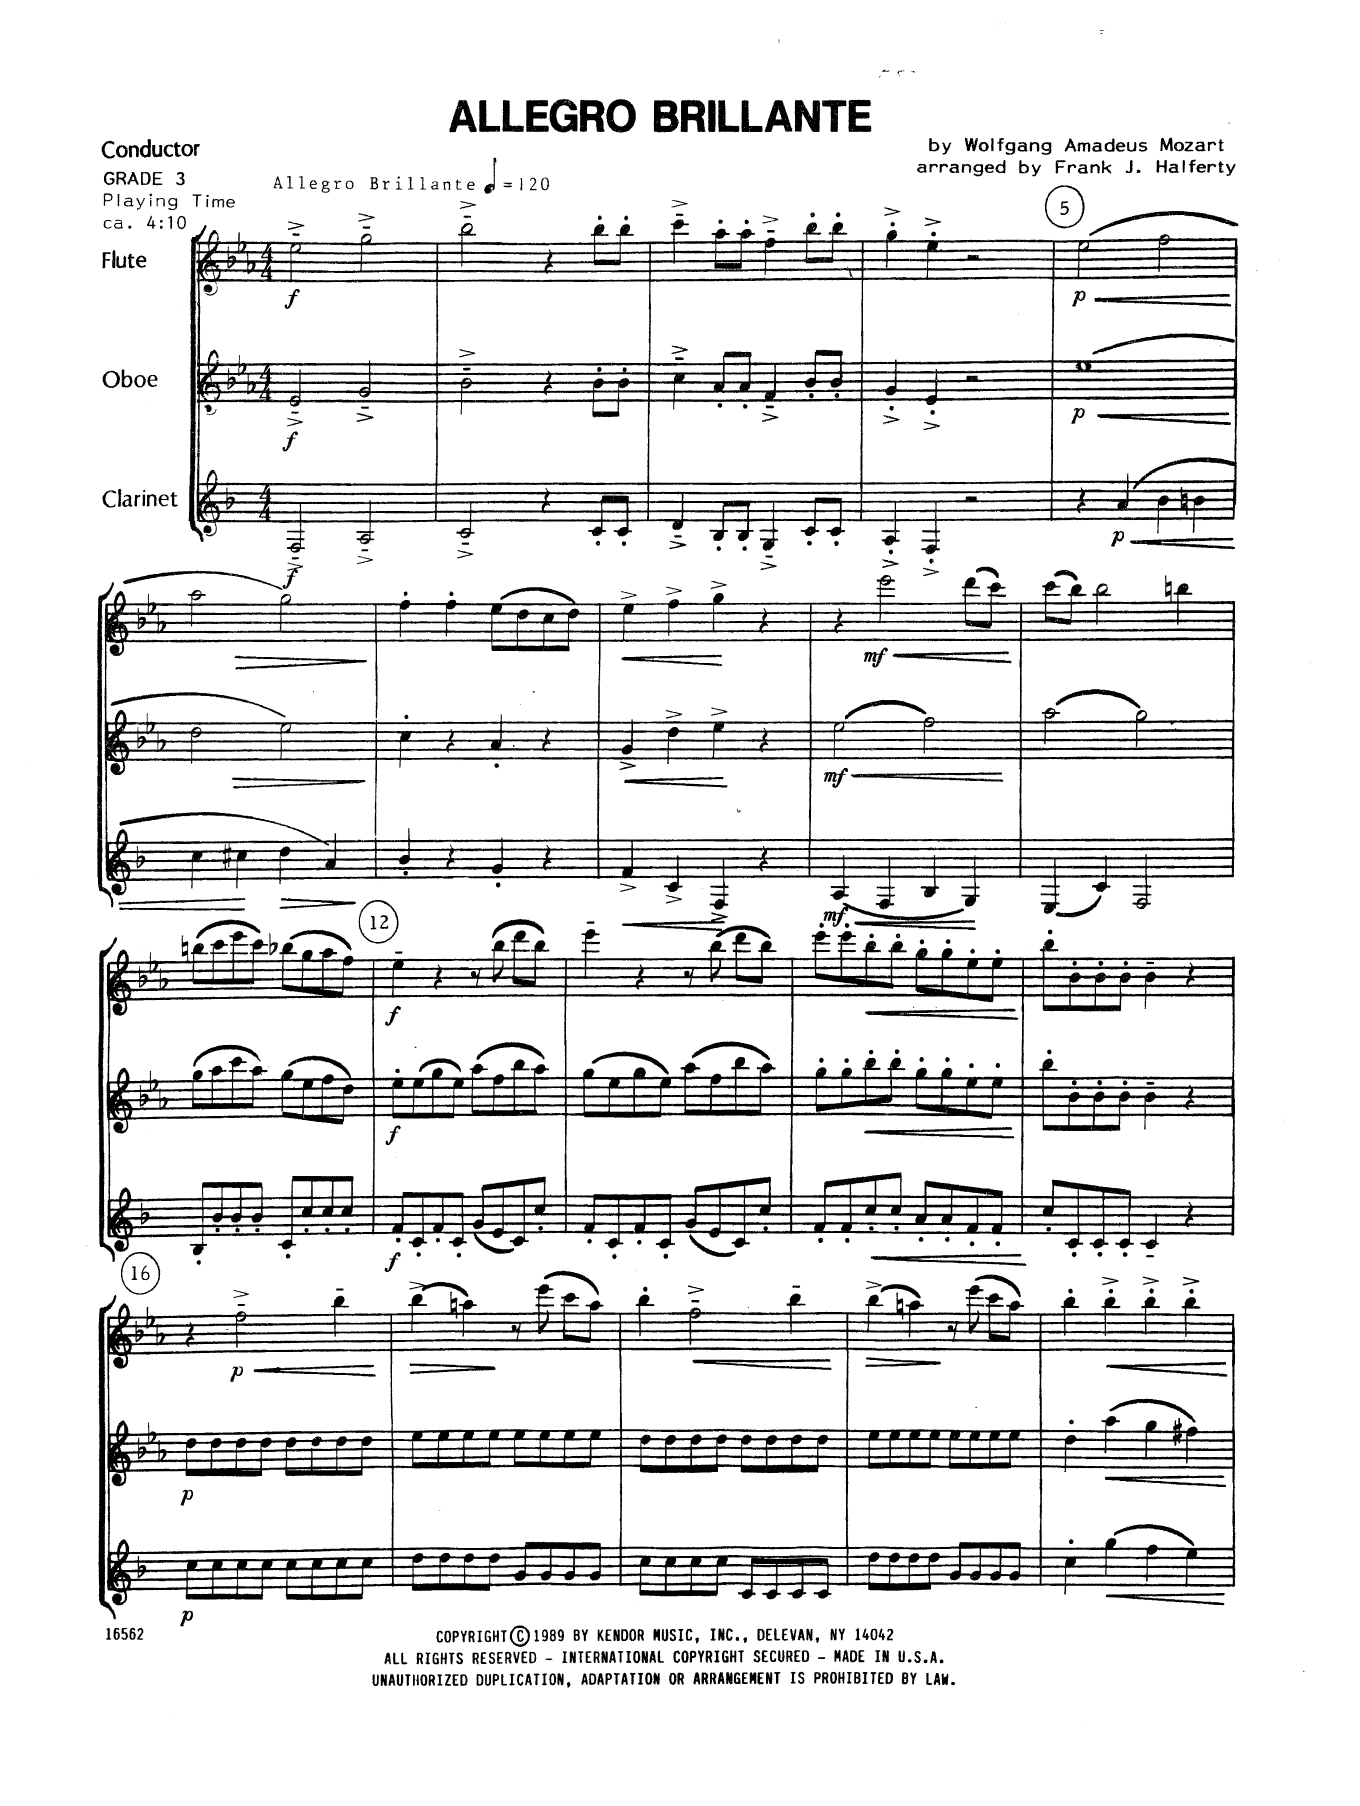 Download Frank J. Halferty Allegro Brillante - Full Score Sheet Music